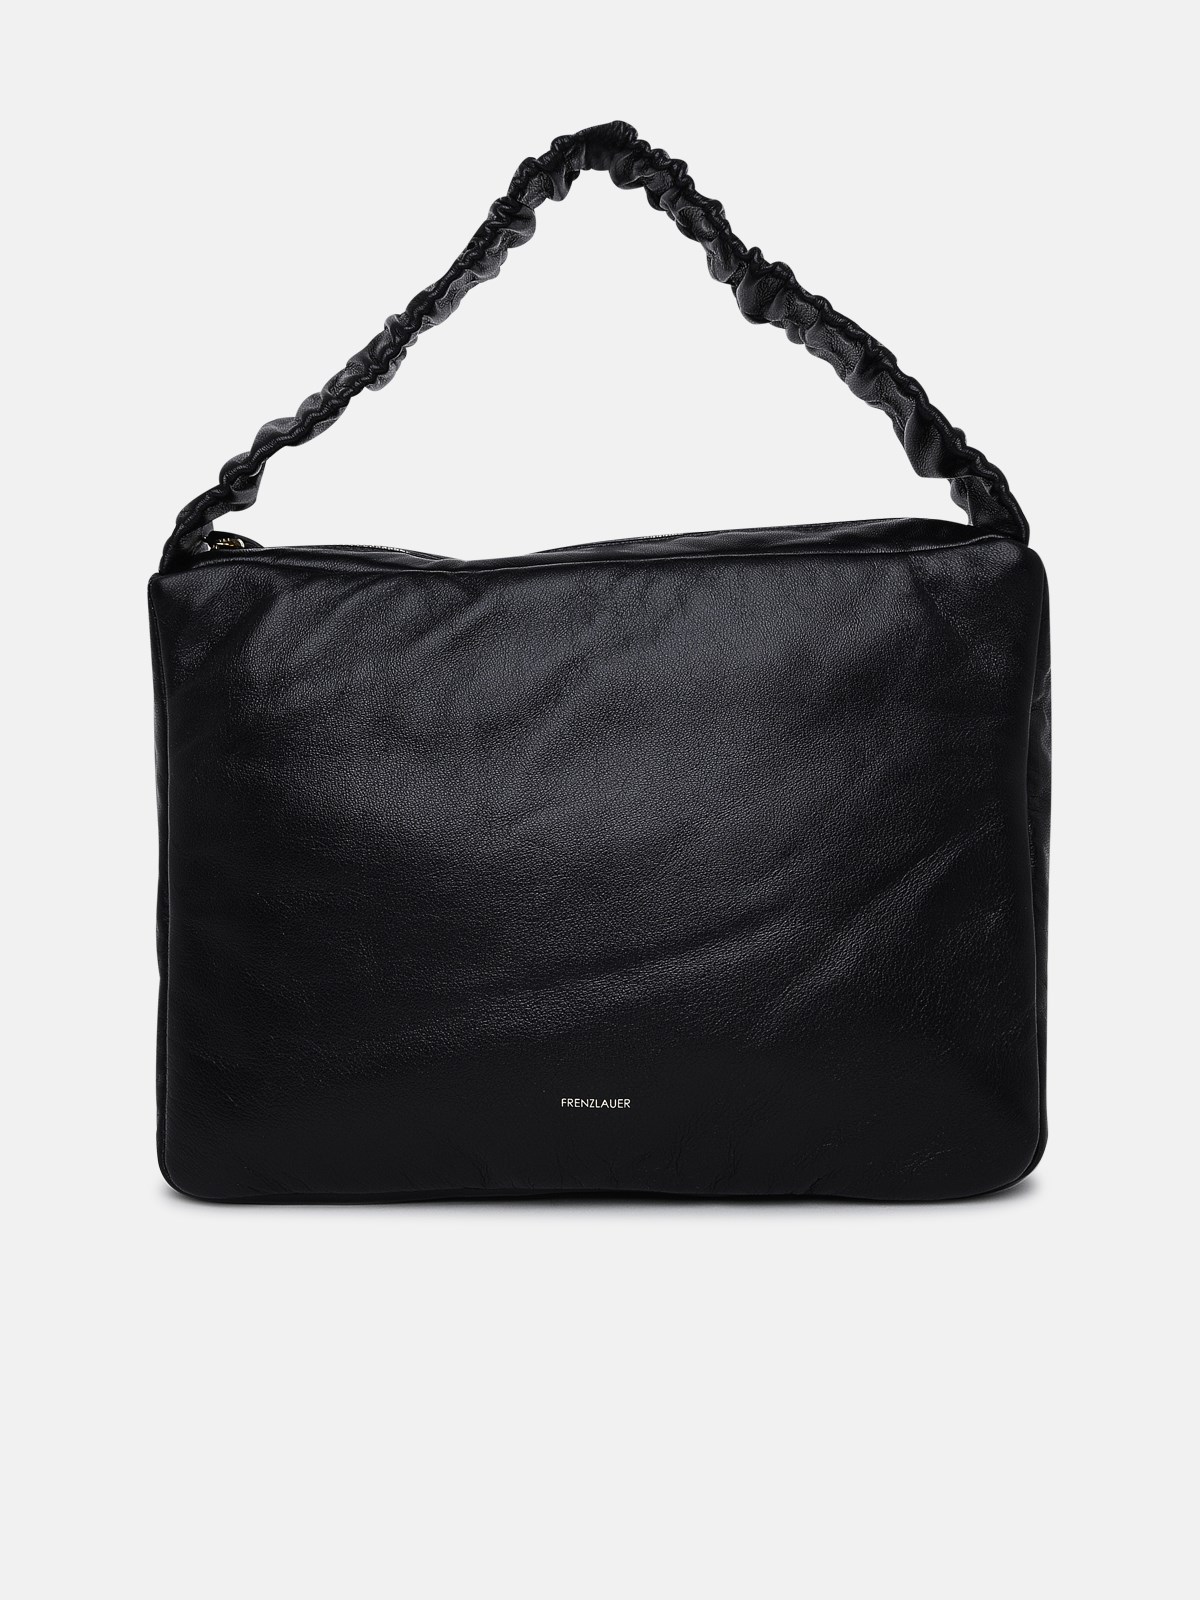 FRENZLAUER Bags for Women | ModeSens